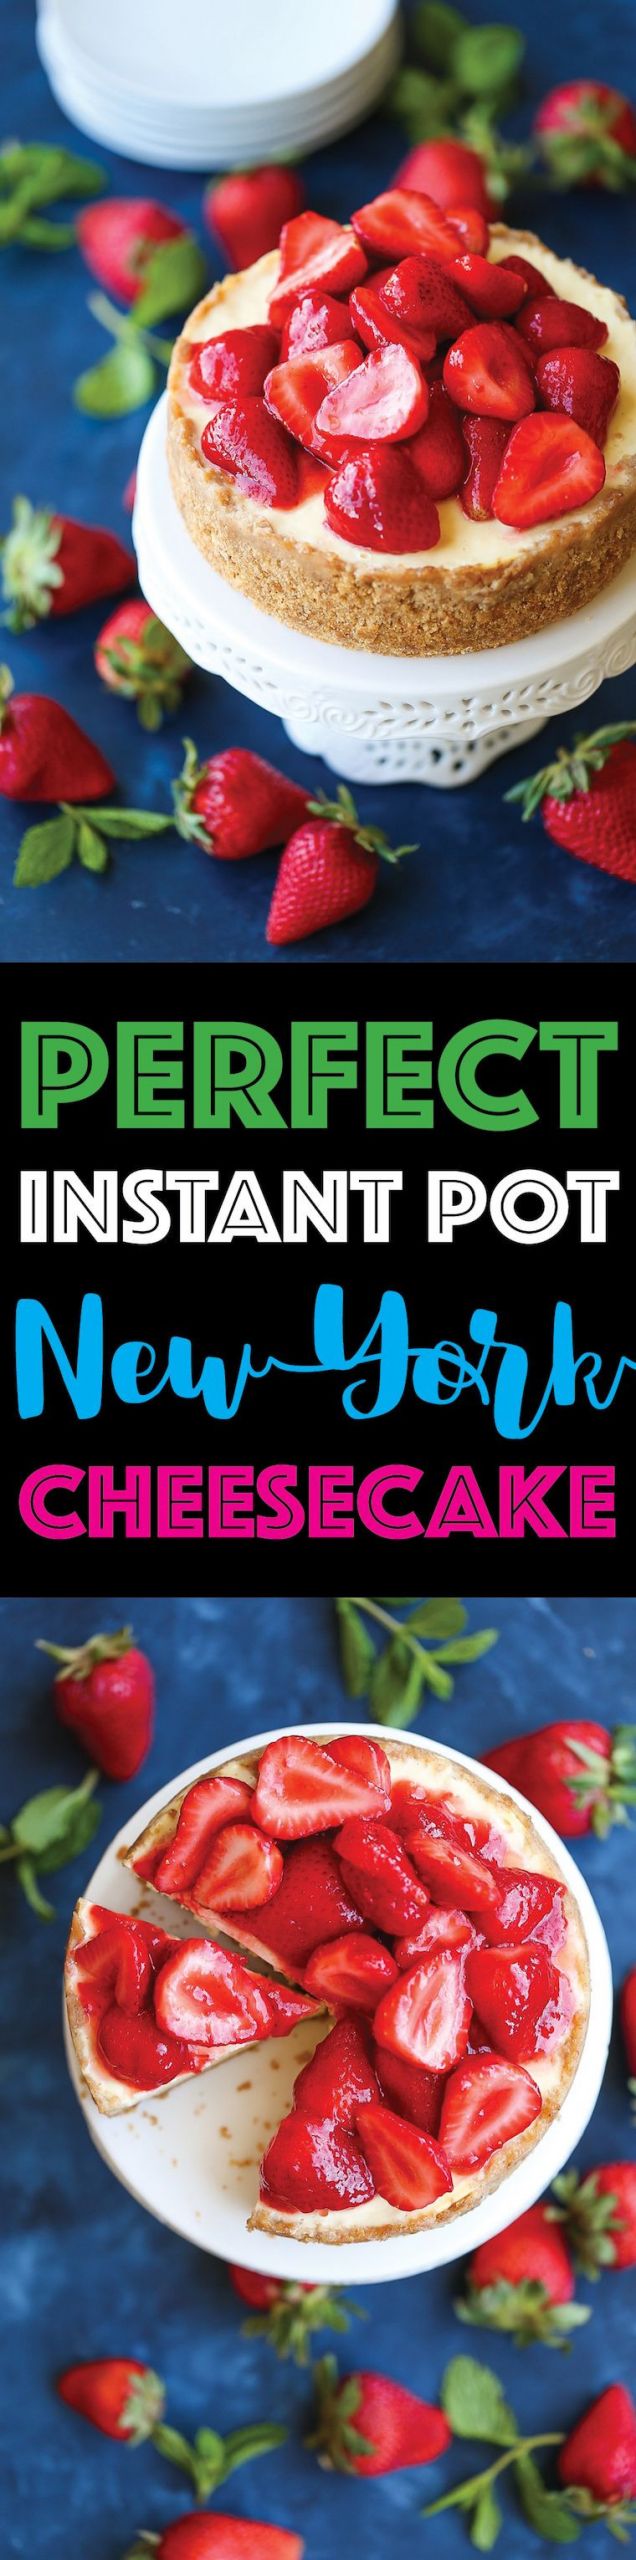 New York Times Instant Pot Recipes
 Perfect Instant Pot New York Cheesecake Recipe